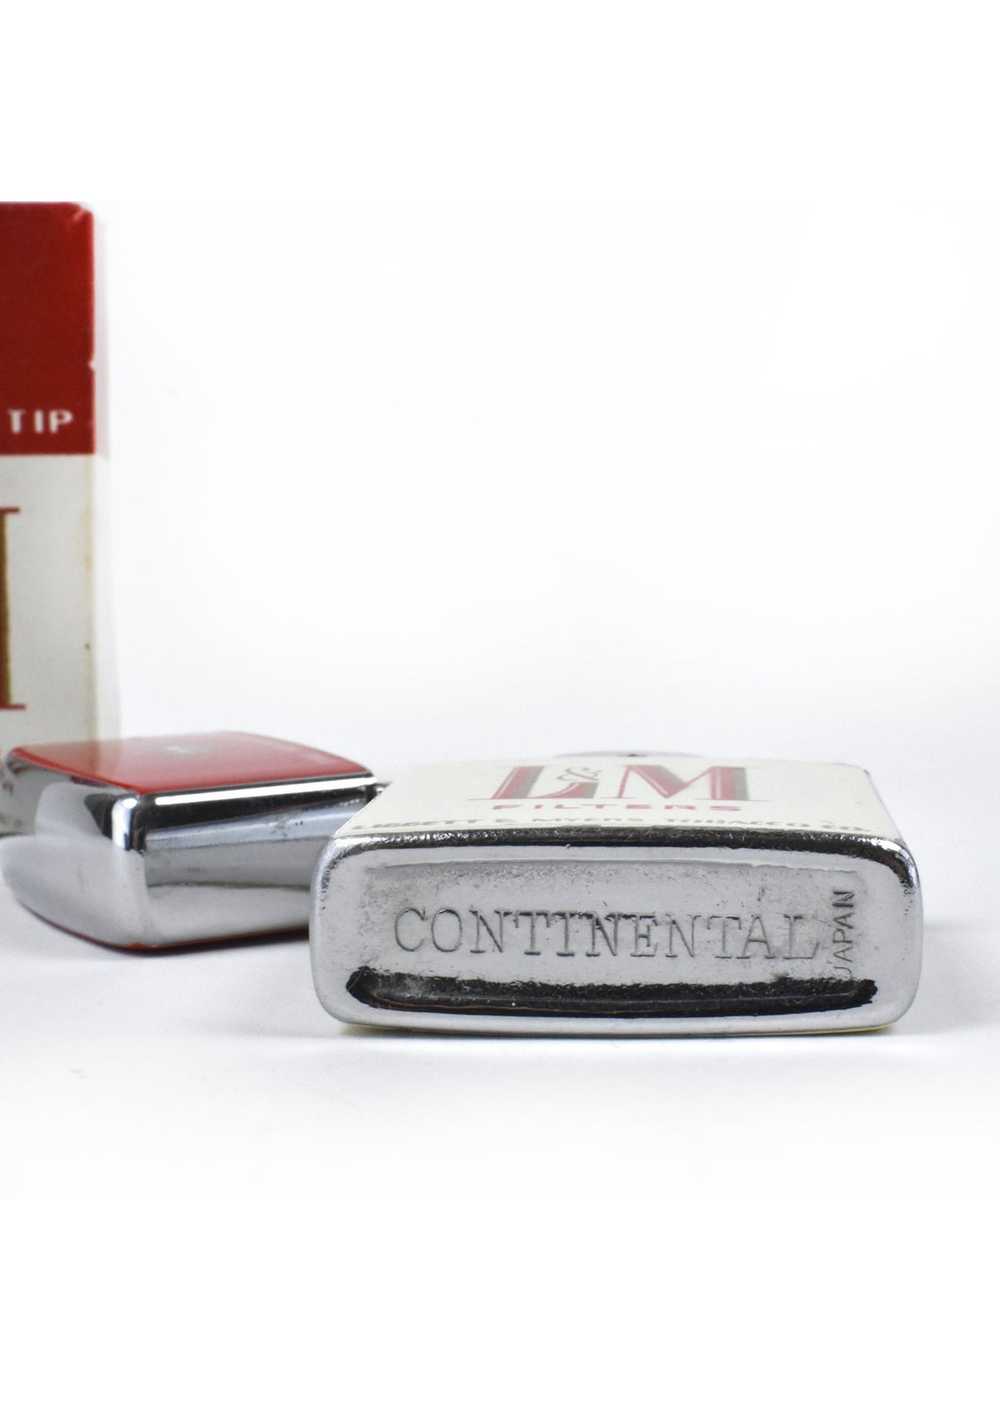 L & M Cigarette Lighter by Continental in Origina… - image 5